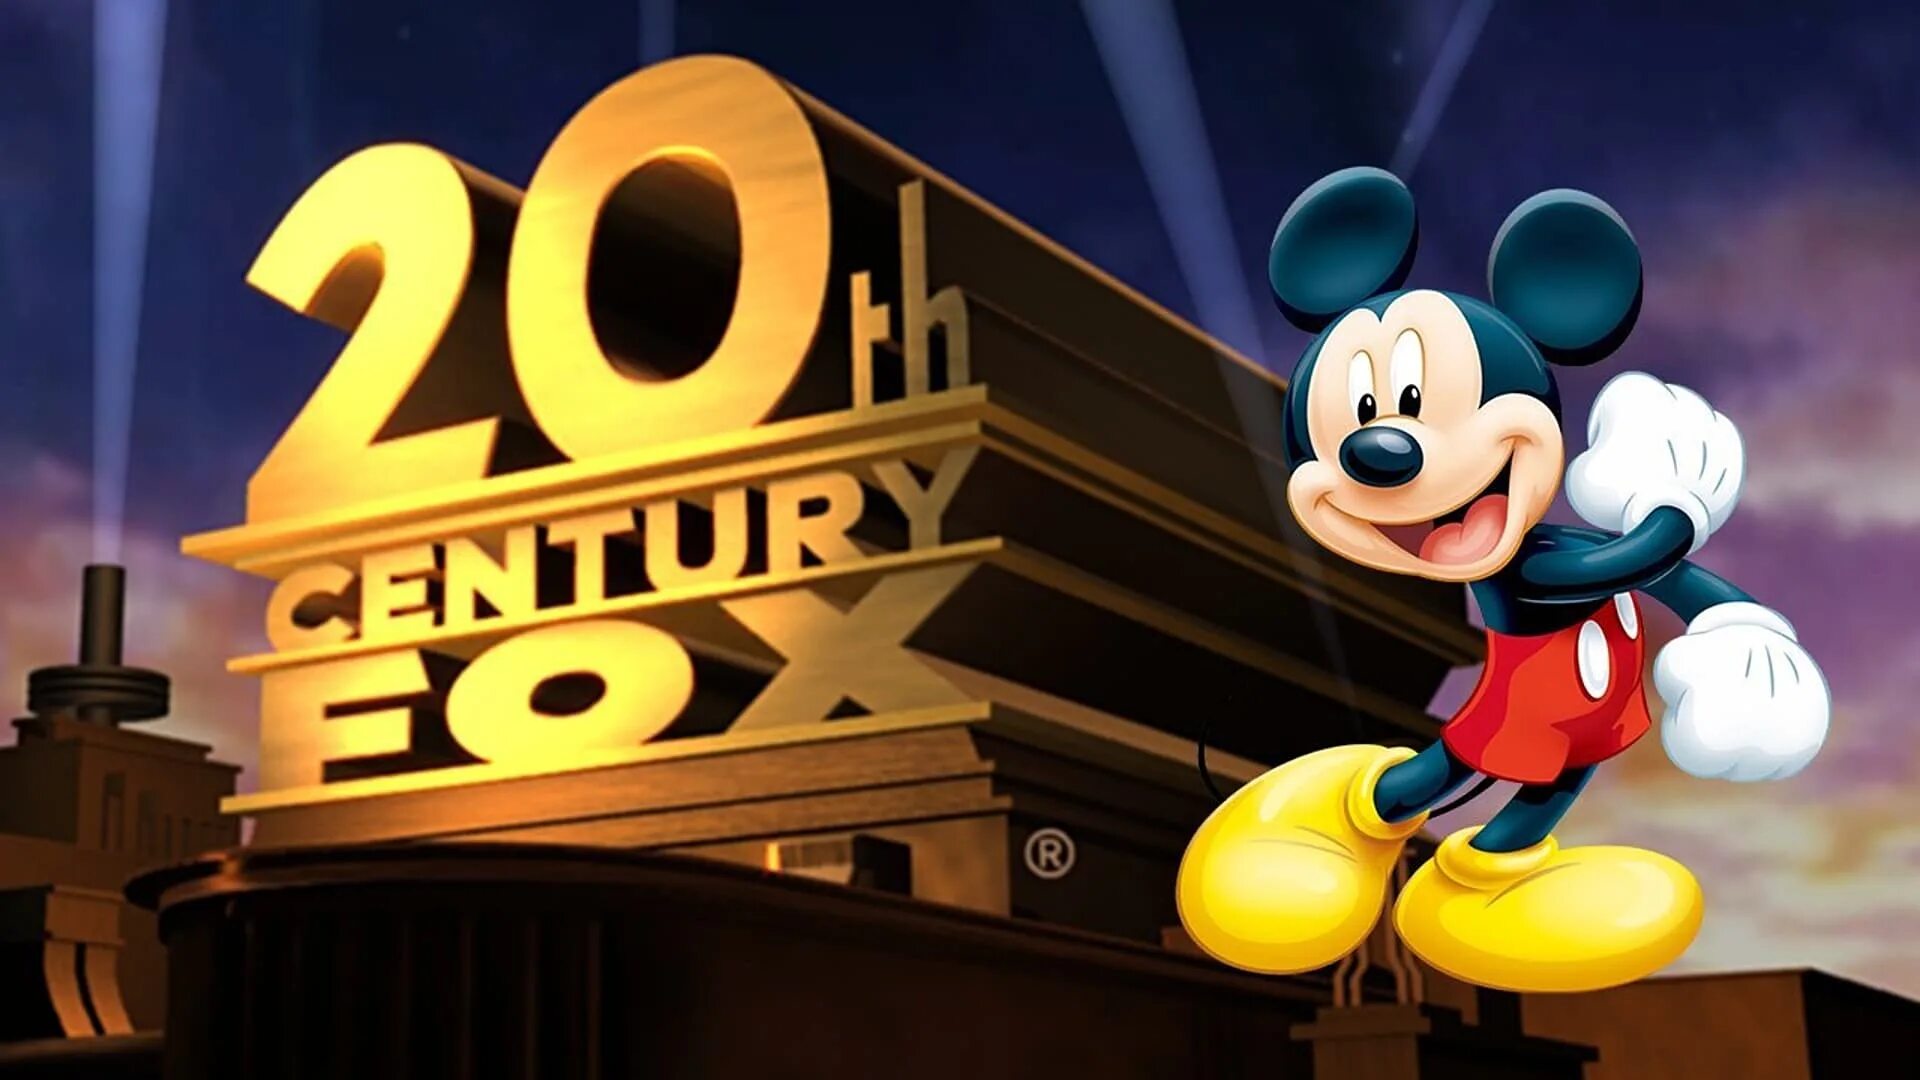 Th fox. 20th Century Walt Disney Fox. Disney 20 Century Fox. 20 Век Фокс Дисней лого.